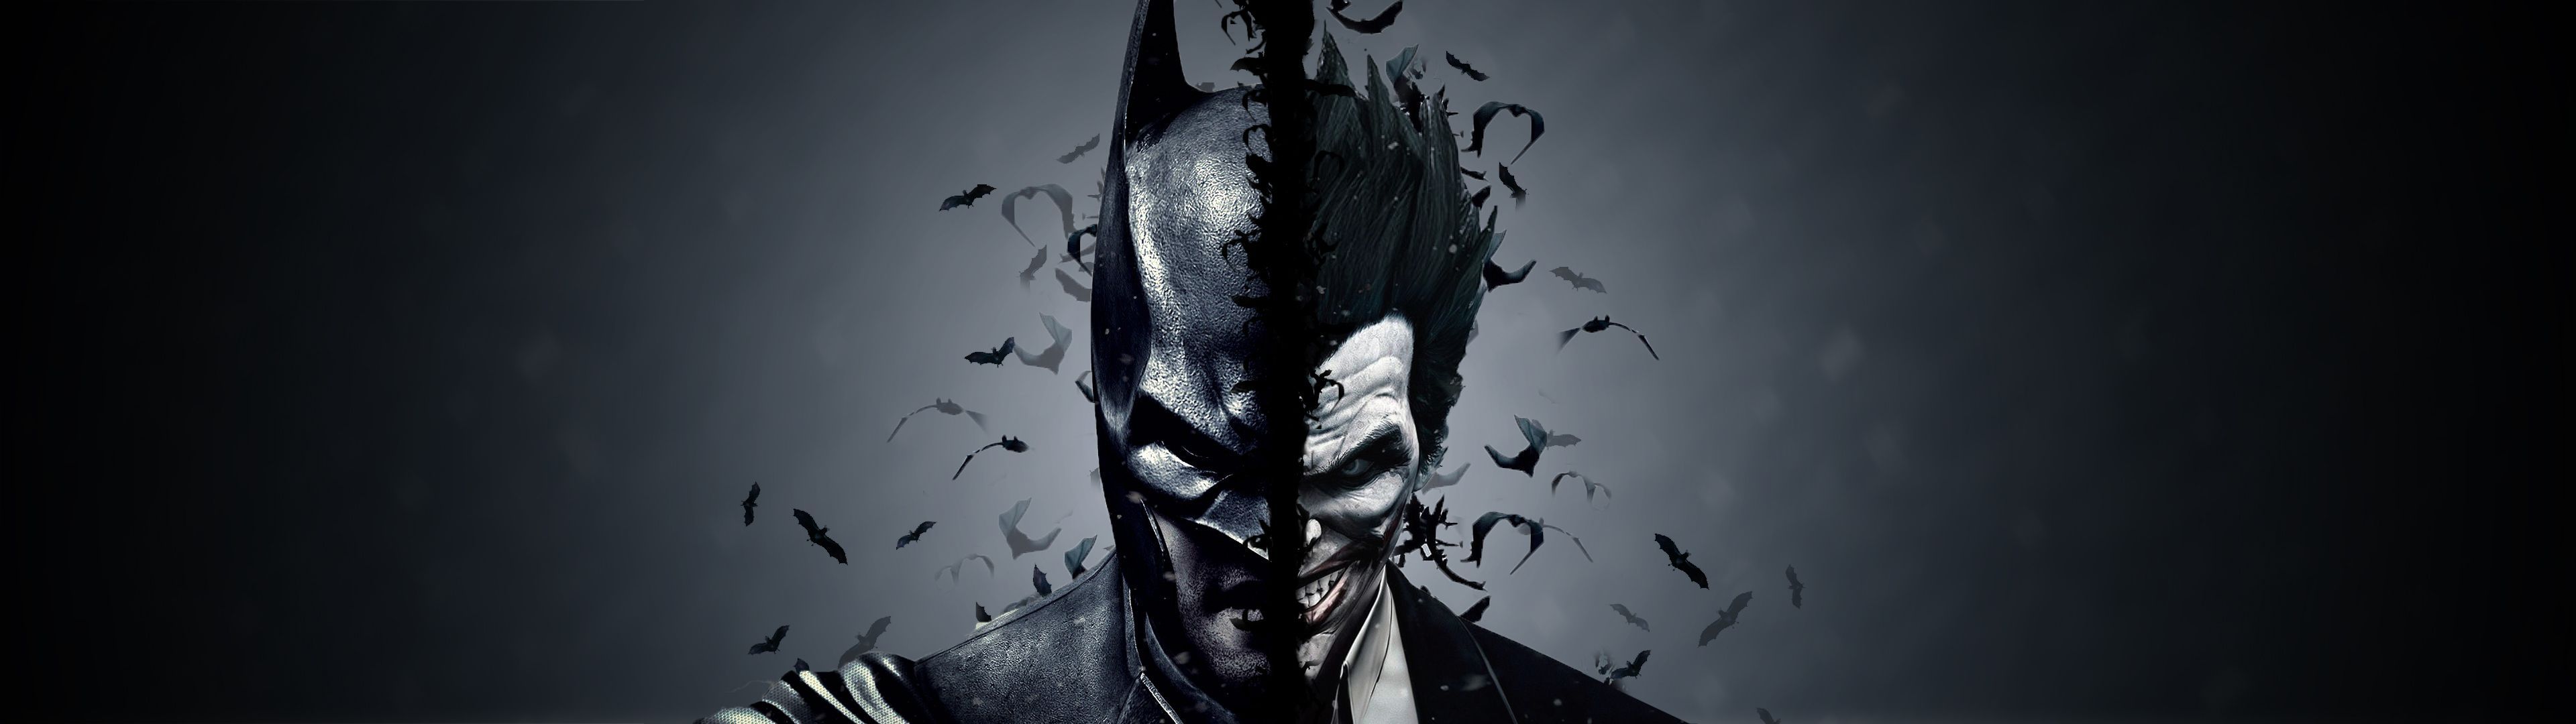 Batman Vs Joker Dual Screen Wallpaper | 3840x1080 | ID:50906